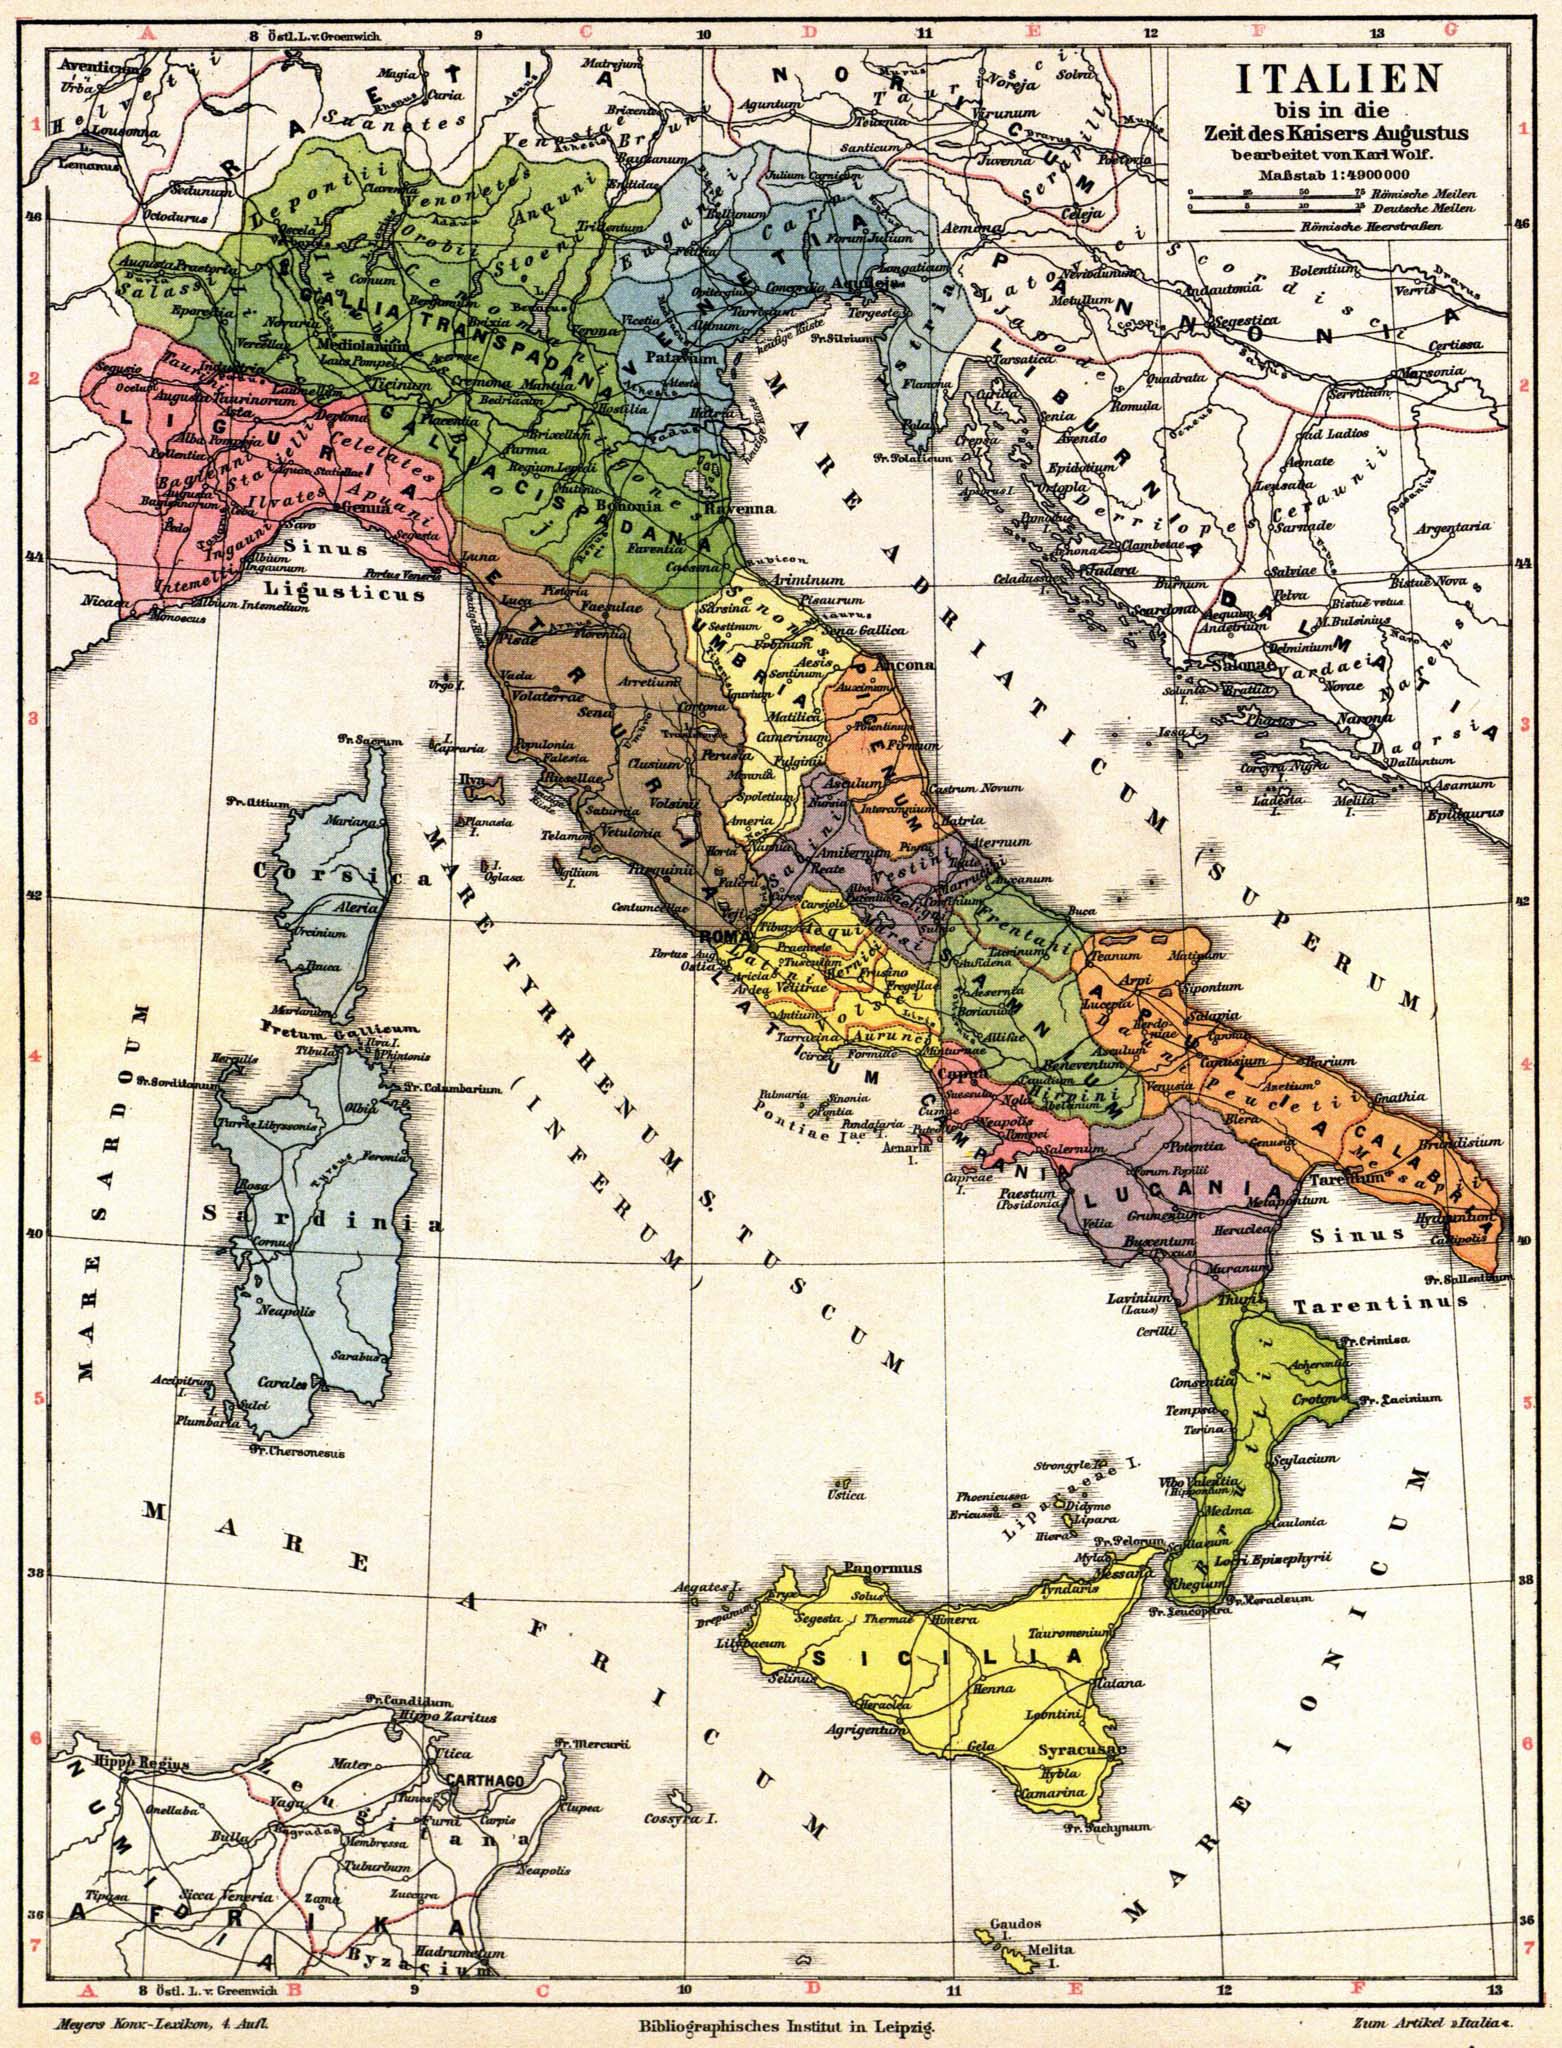 Monoecus in Roman Liguria in Italy, around 1st century BC